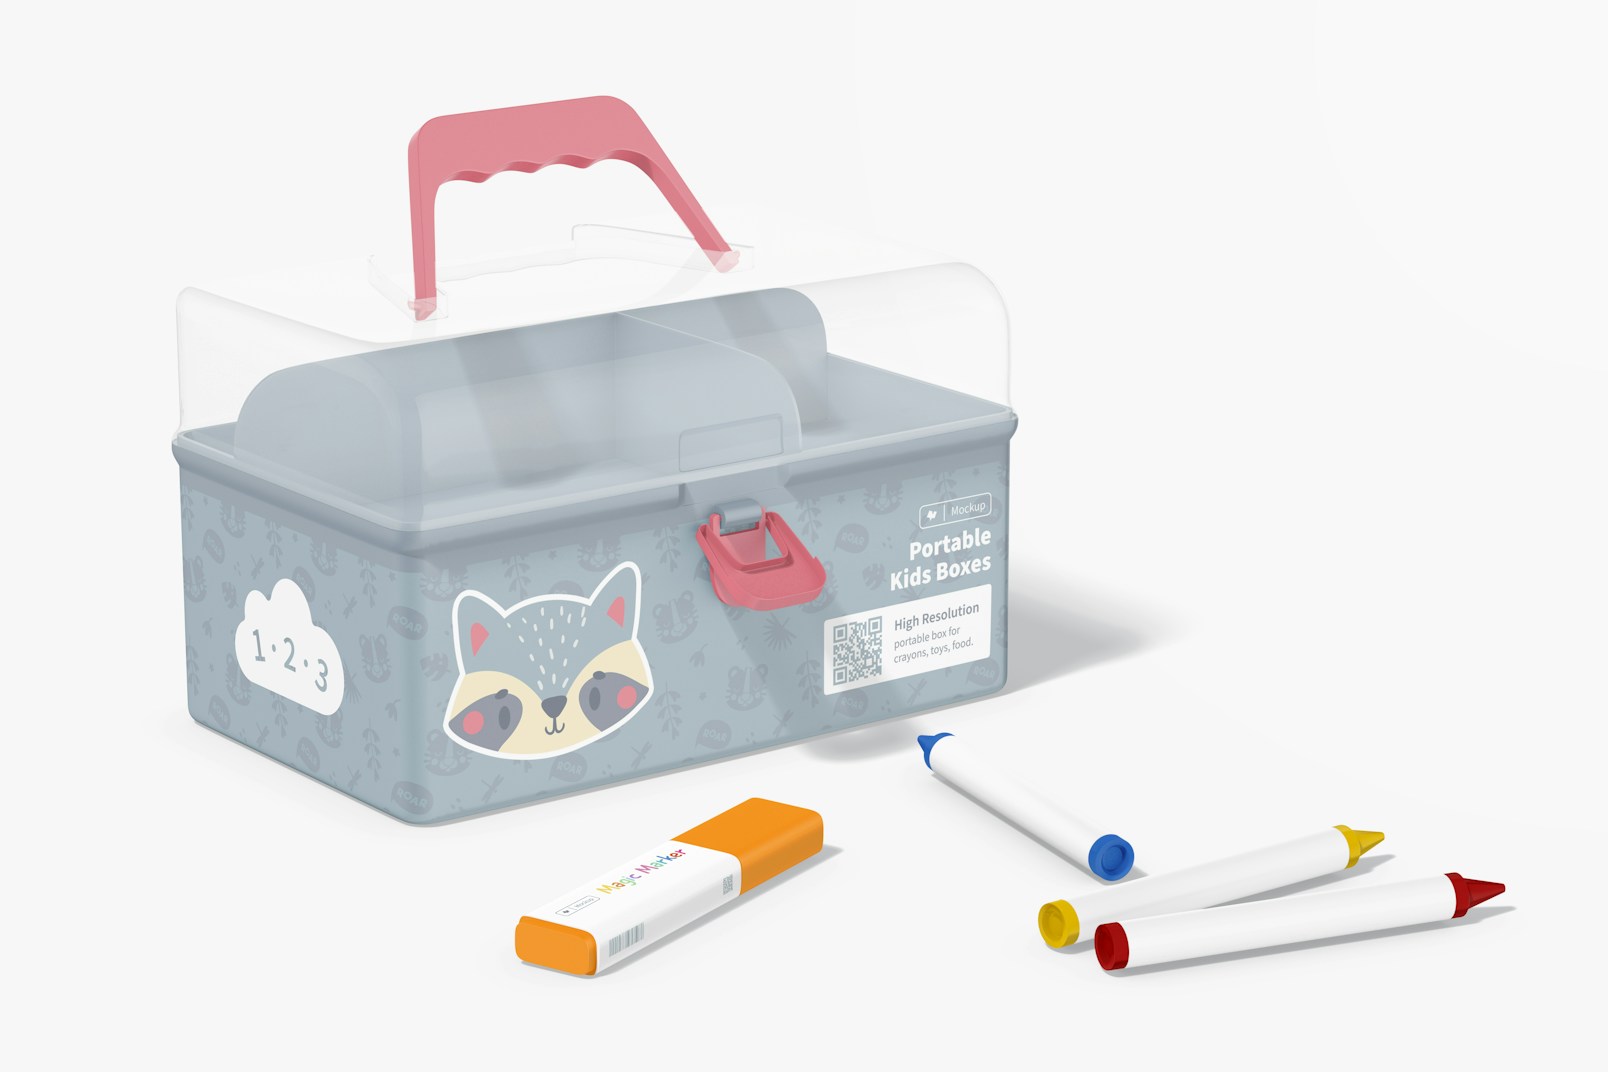 Portable Kids Box Mockup, with Crayons